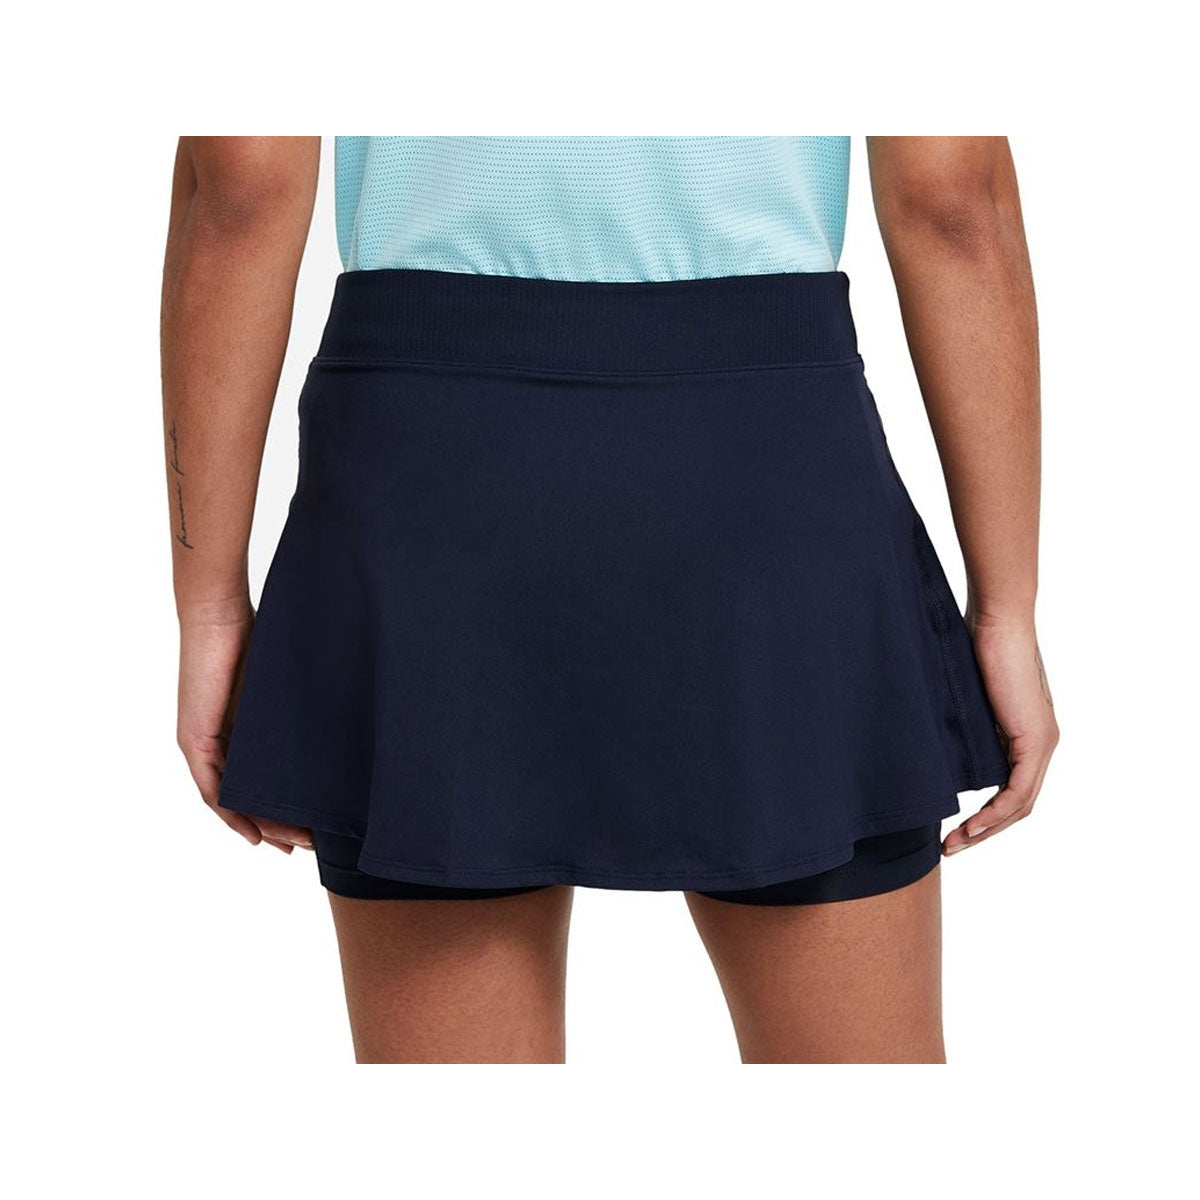 Nike Women's Court Victory Tall Skirt